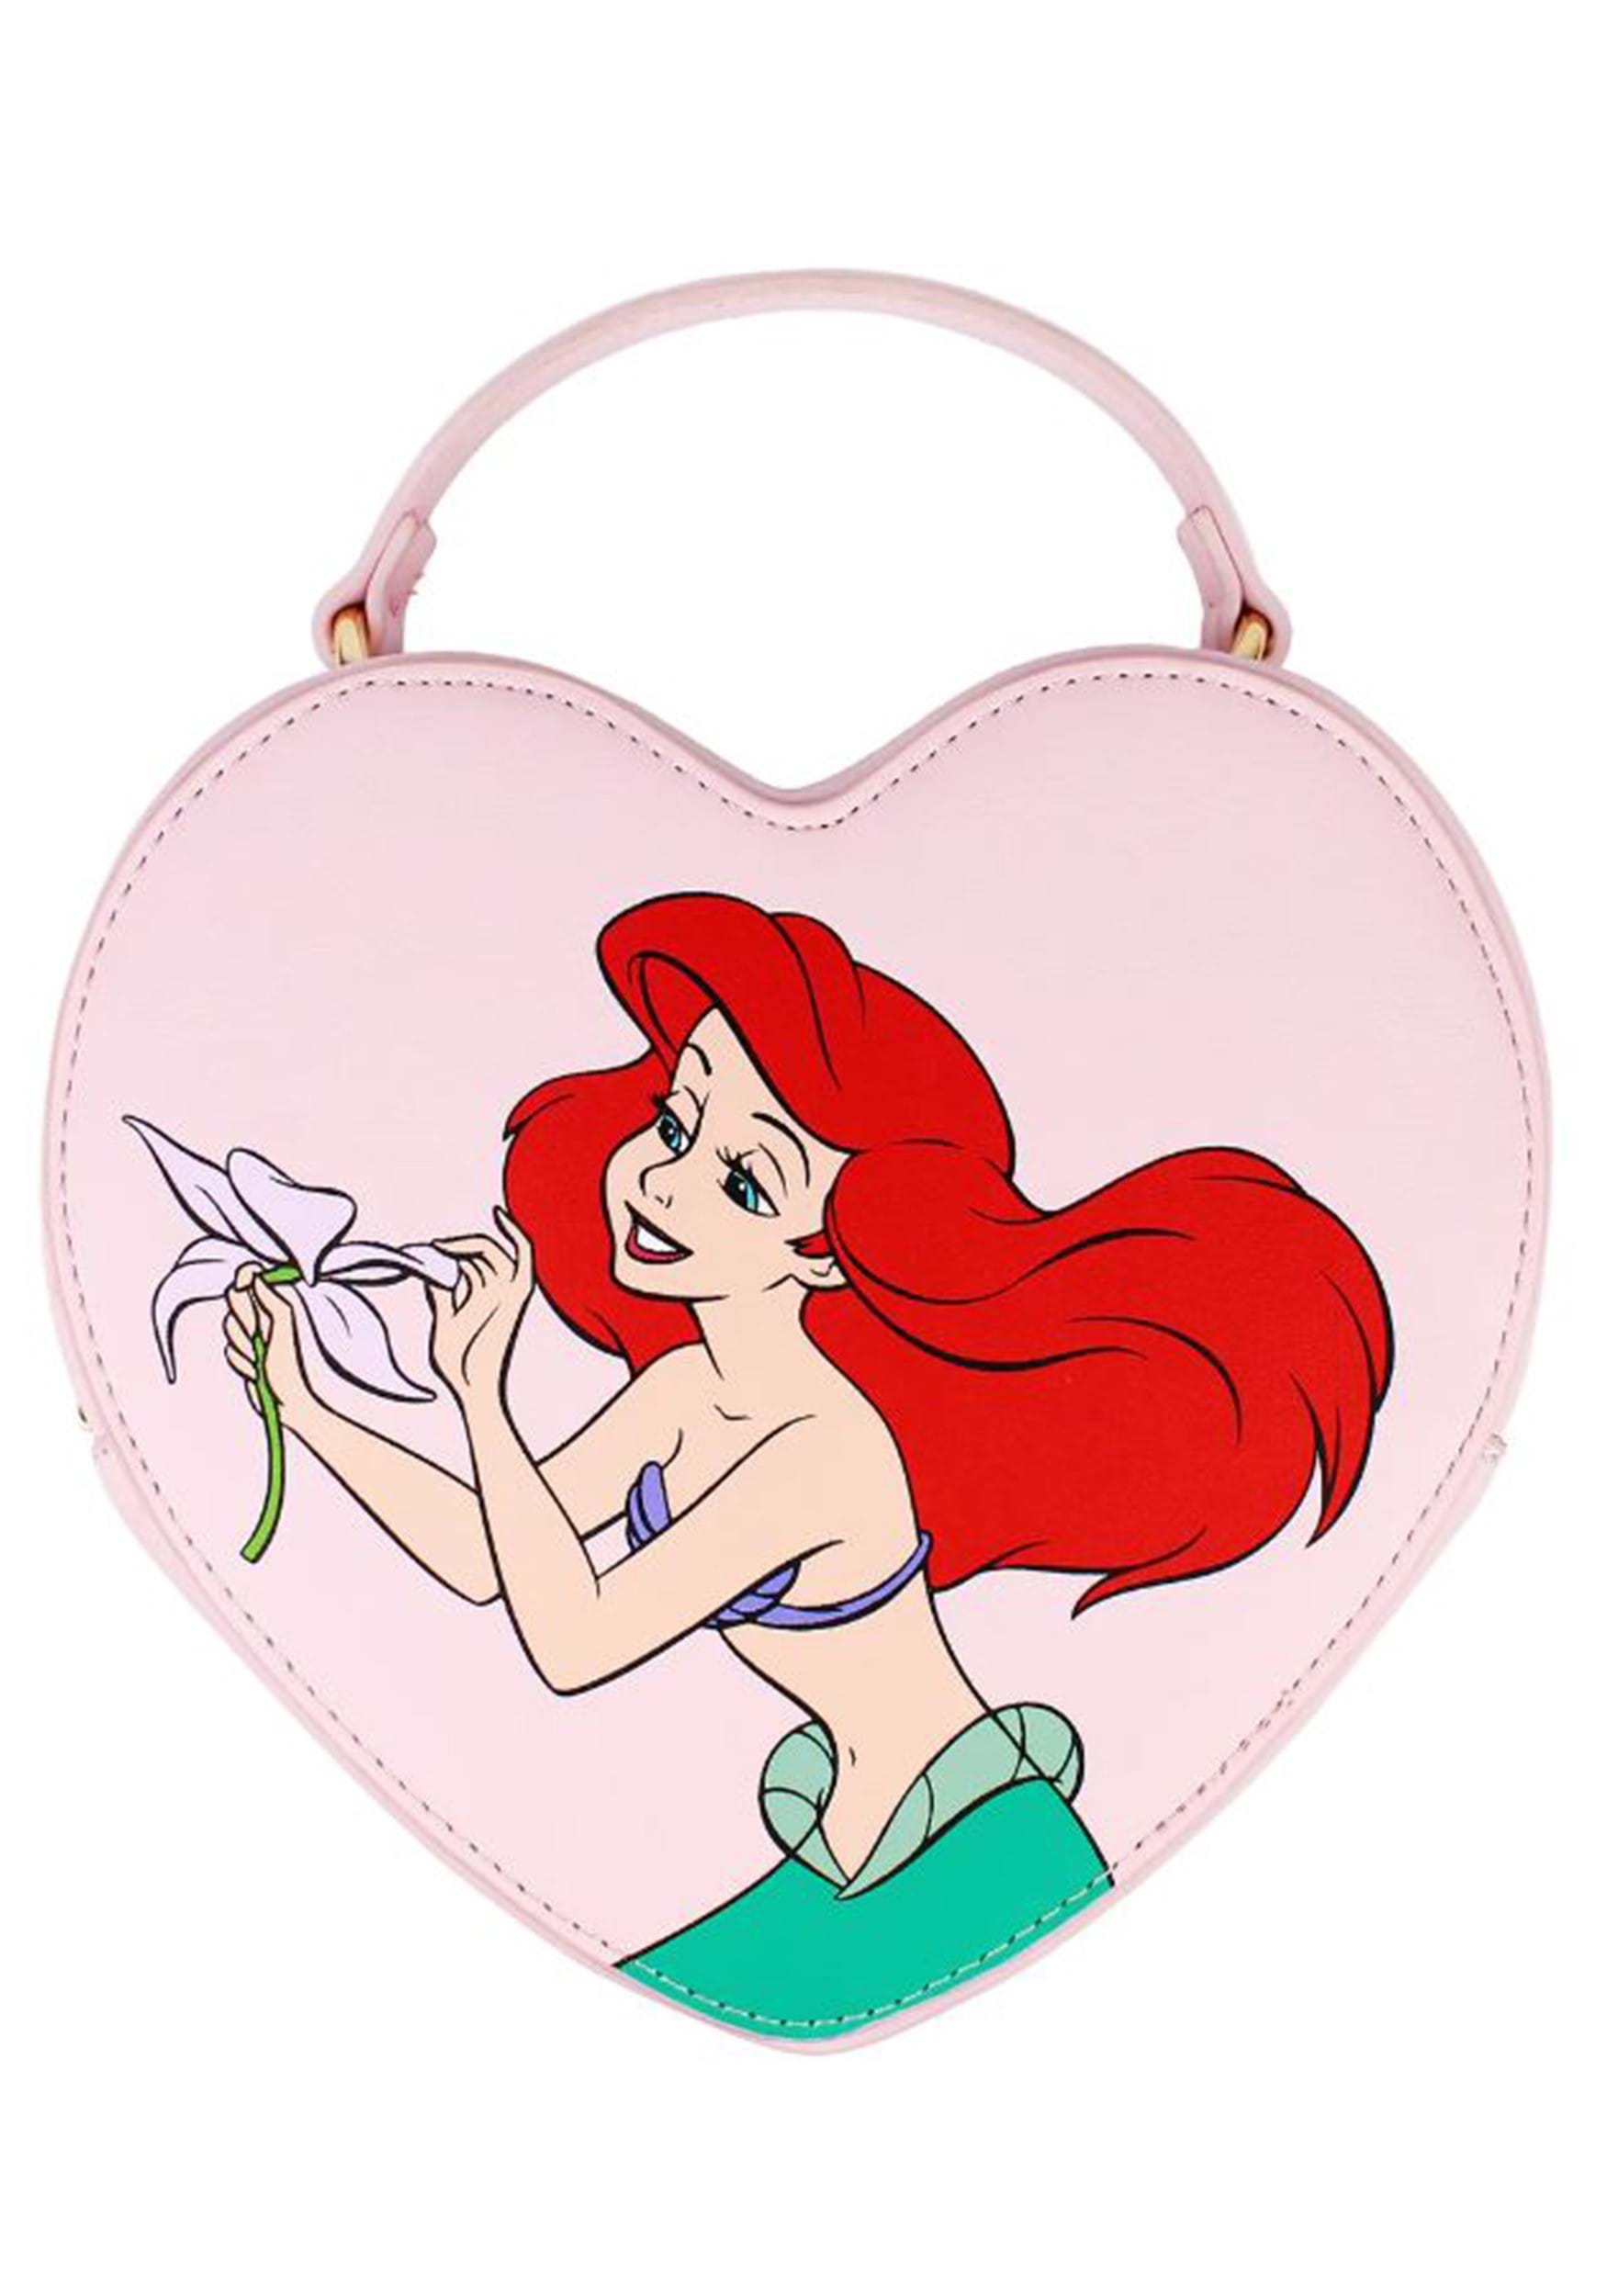 https://images.fun.com/products/92905/1-1/cakeworthy-little-mermaid-heart-purse.jpg